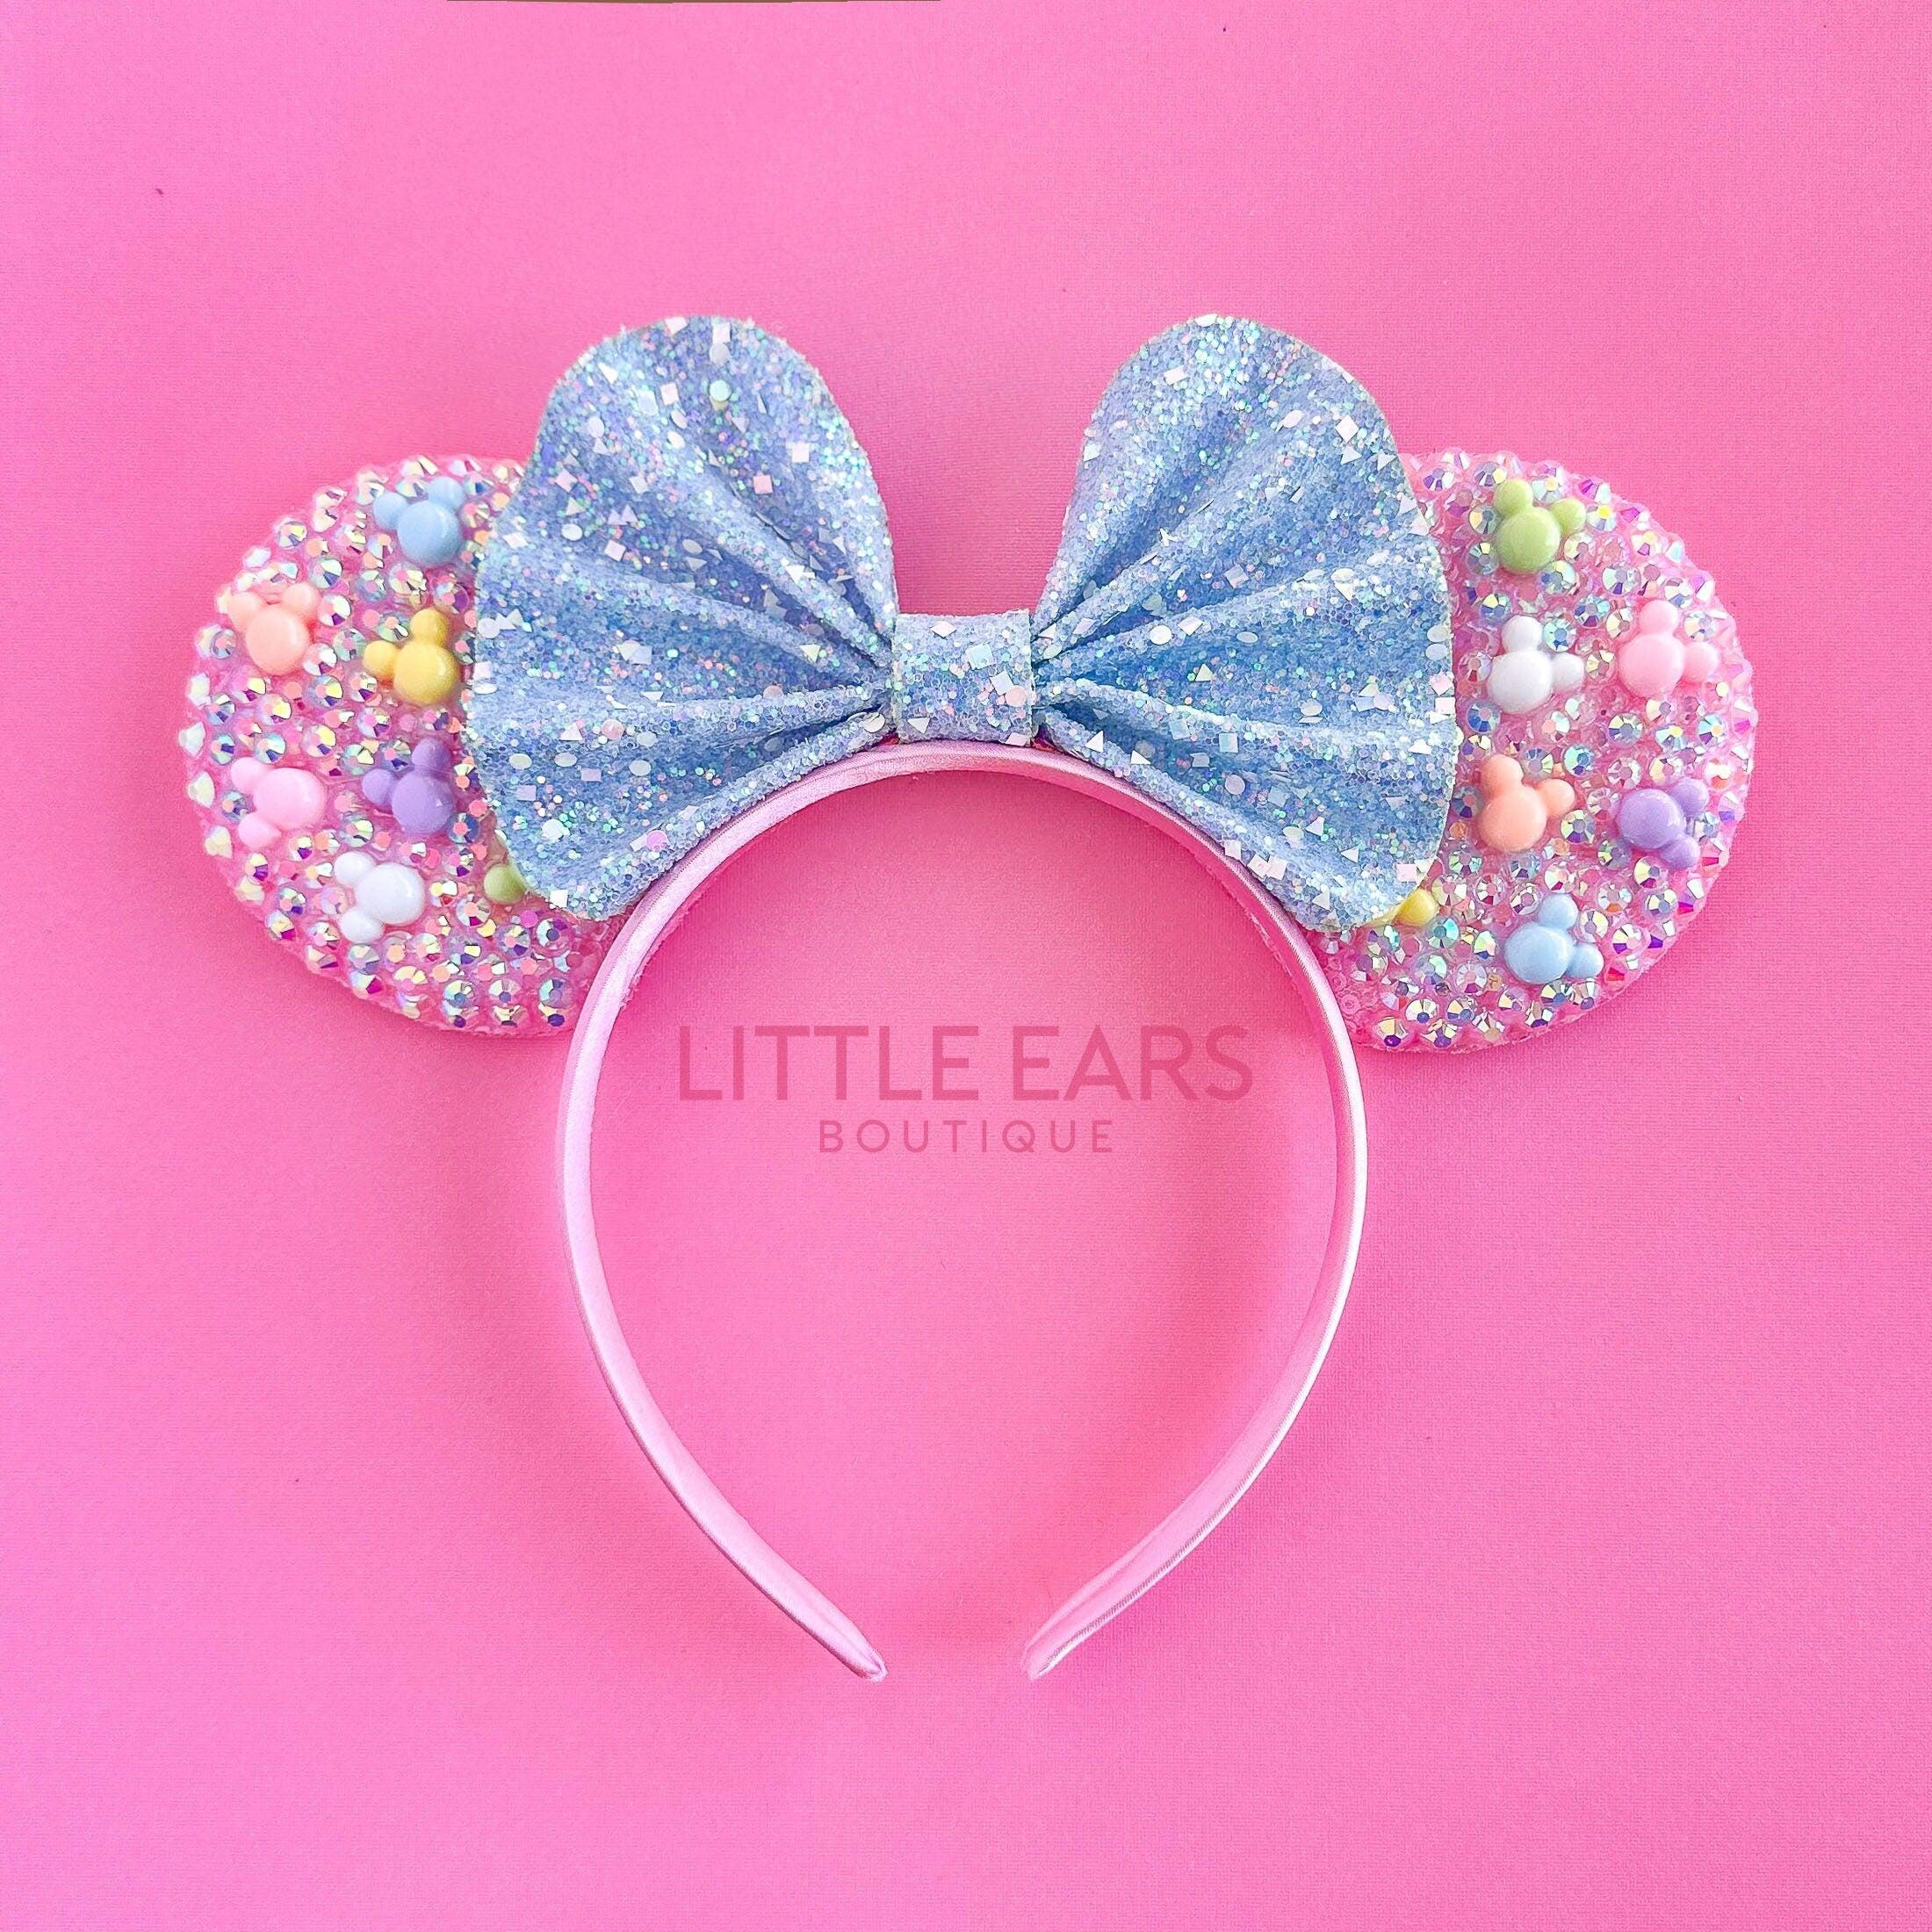 LV DESIGN BLUE Mickey Mouse Bow Girl Minnie Ears Disney Parks